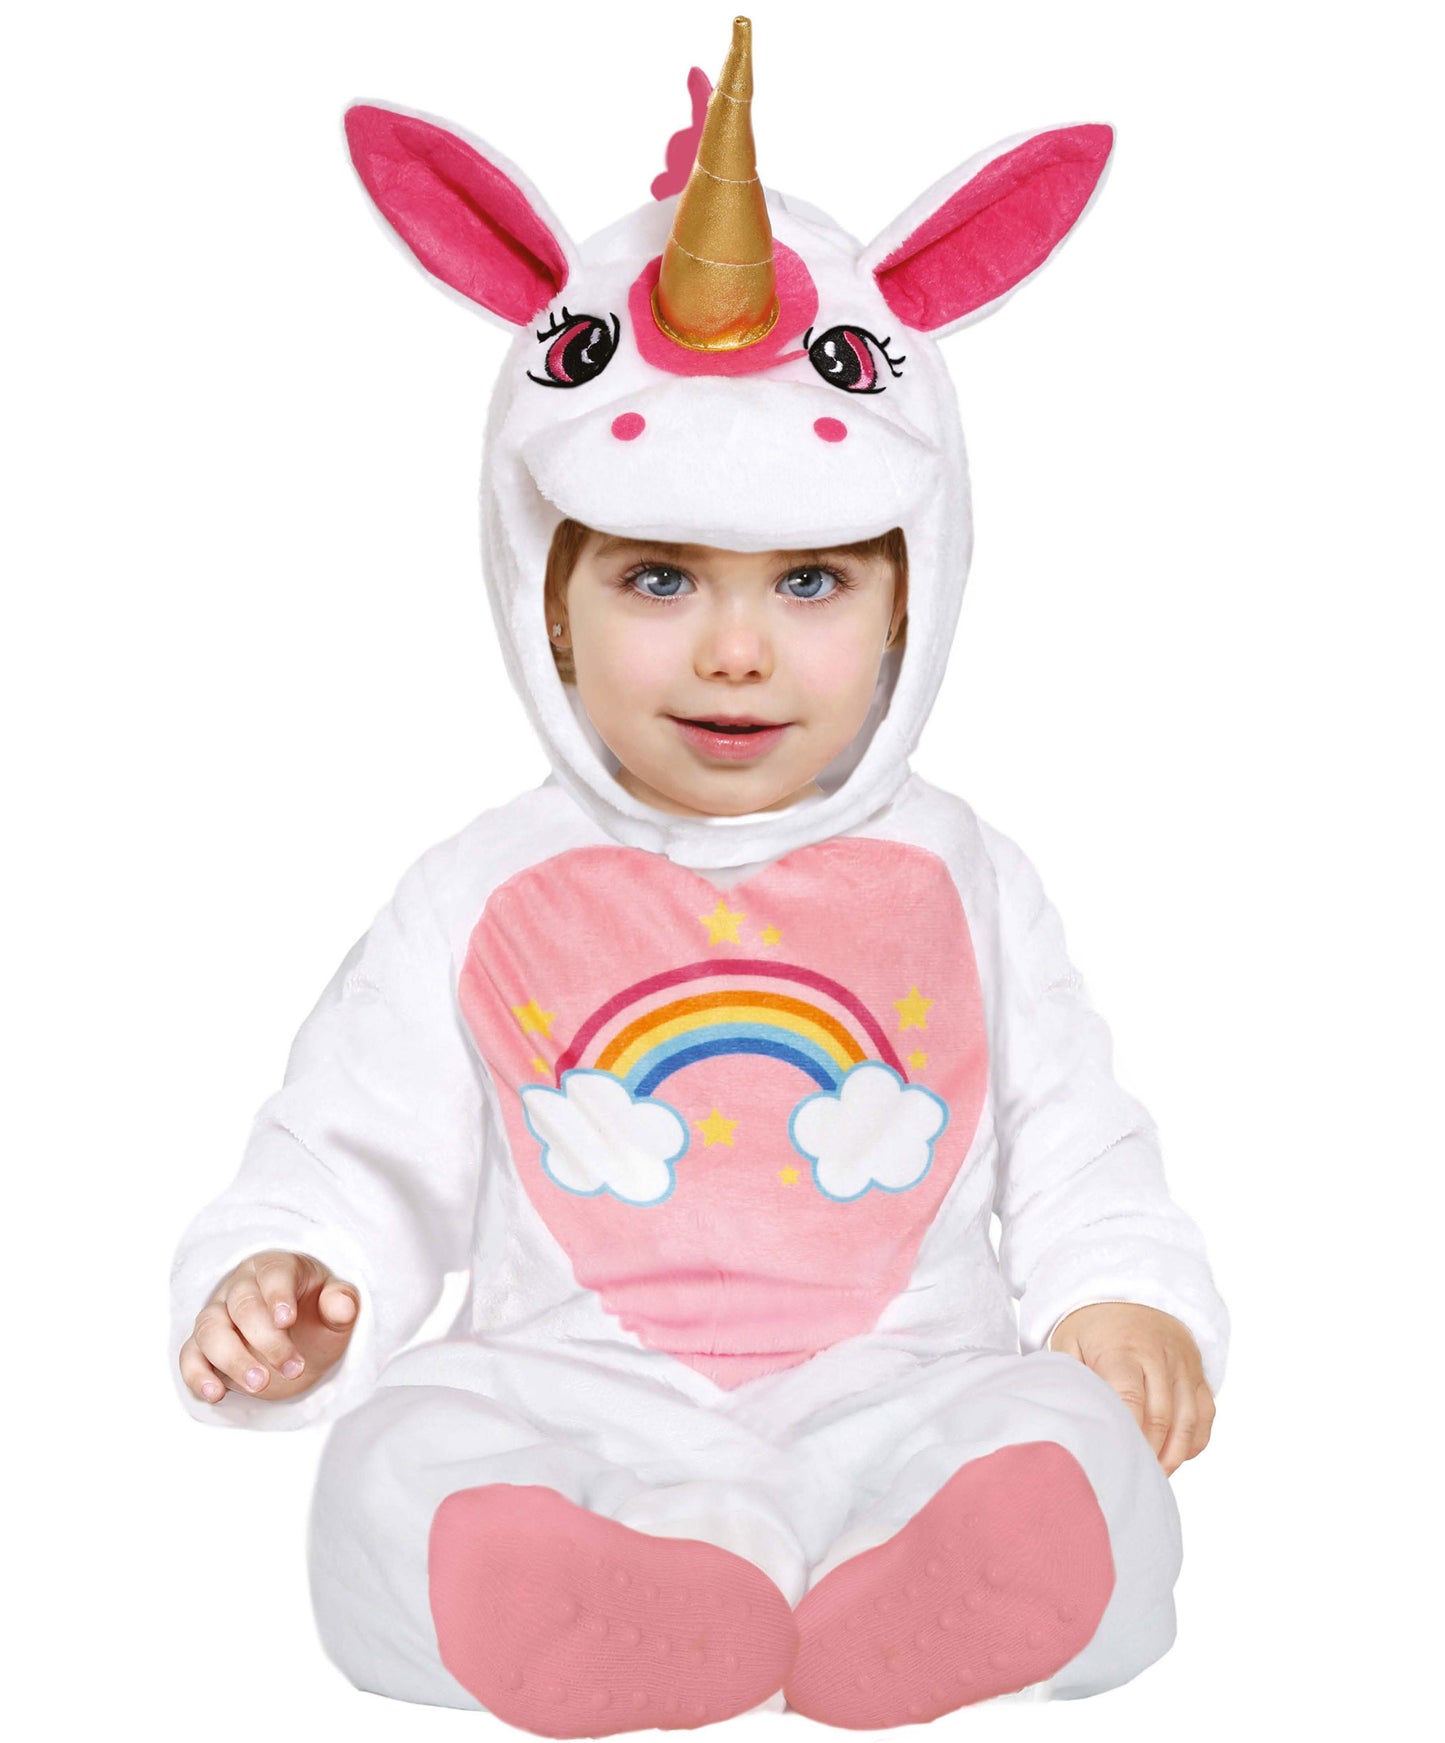 Baby Rainbow Unicorn Costume